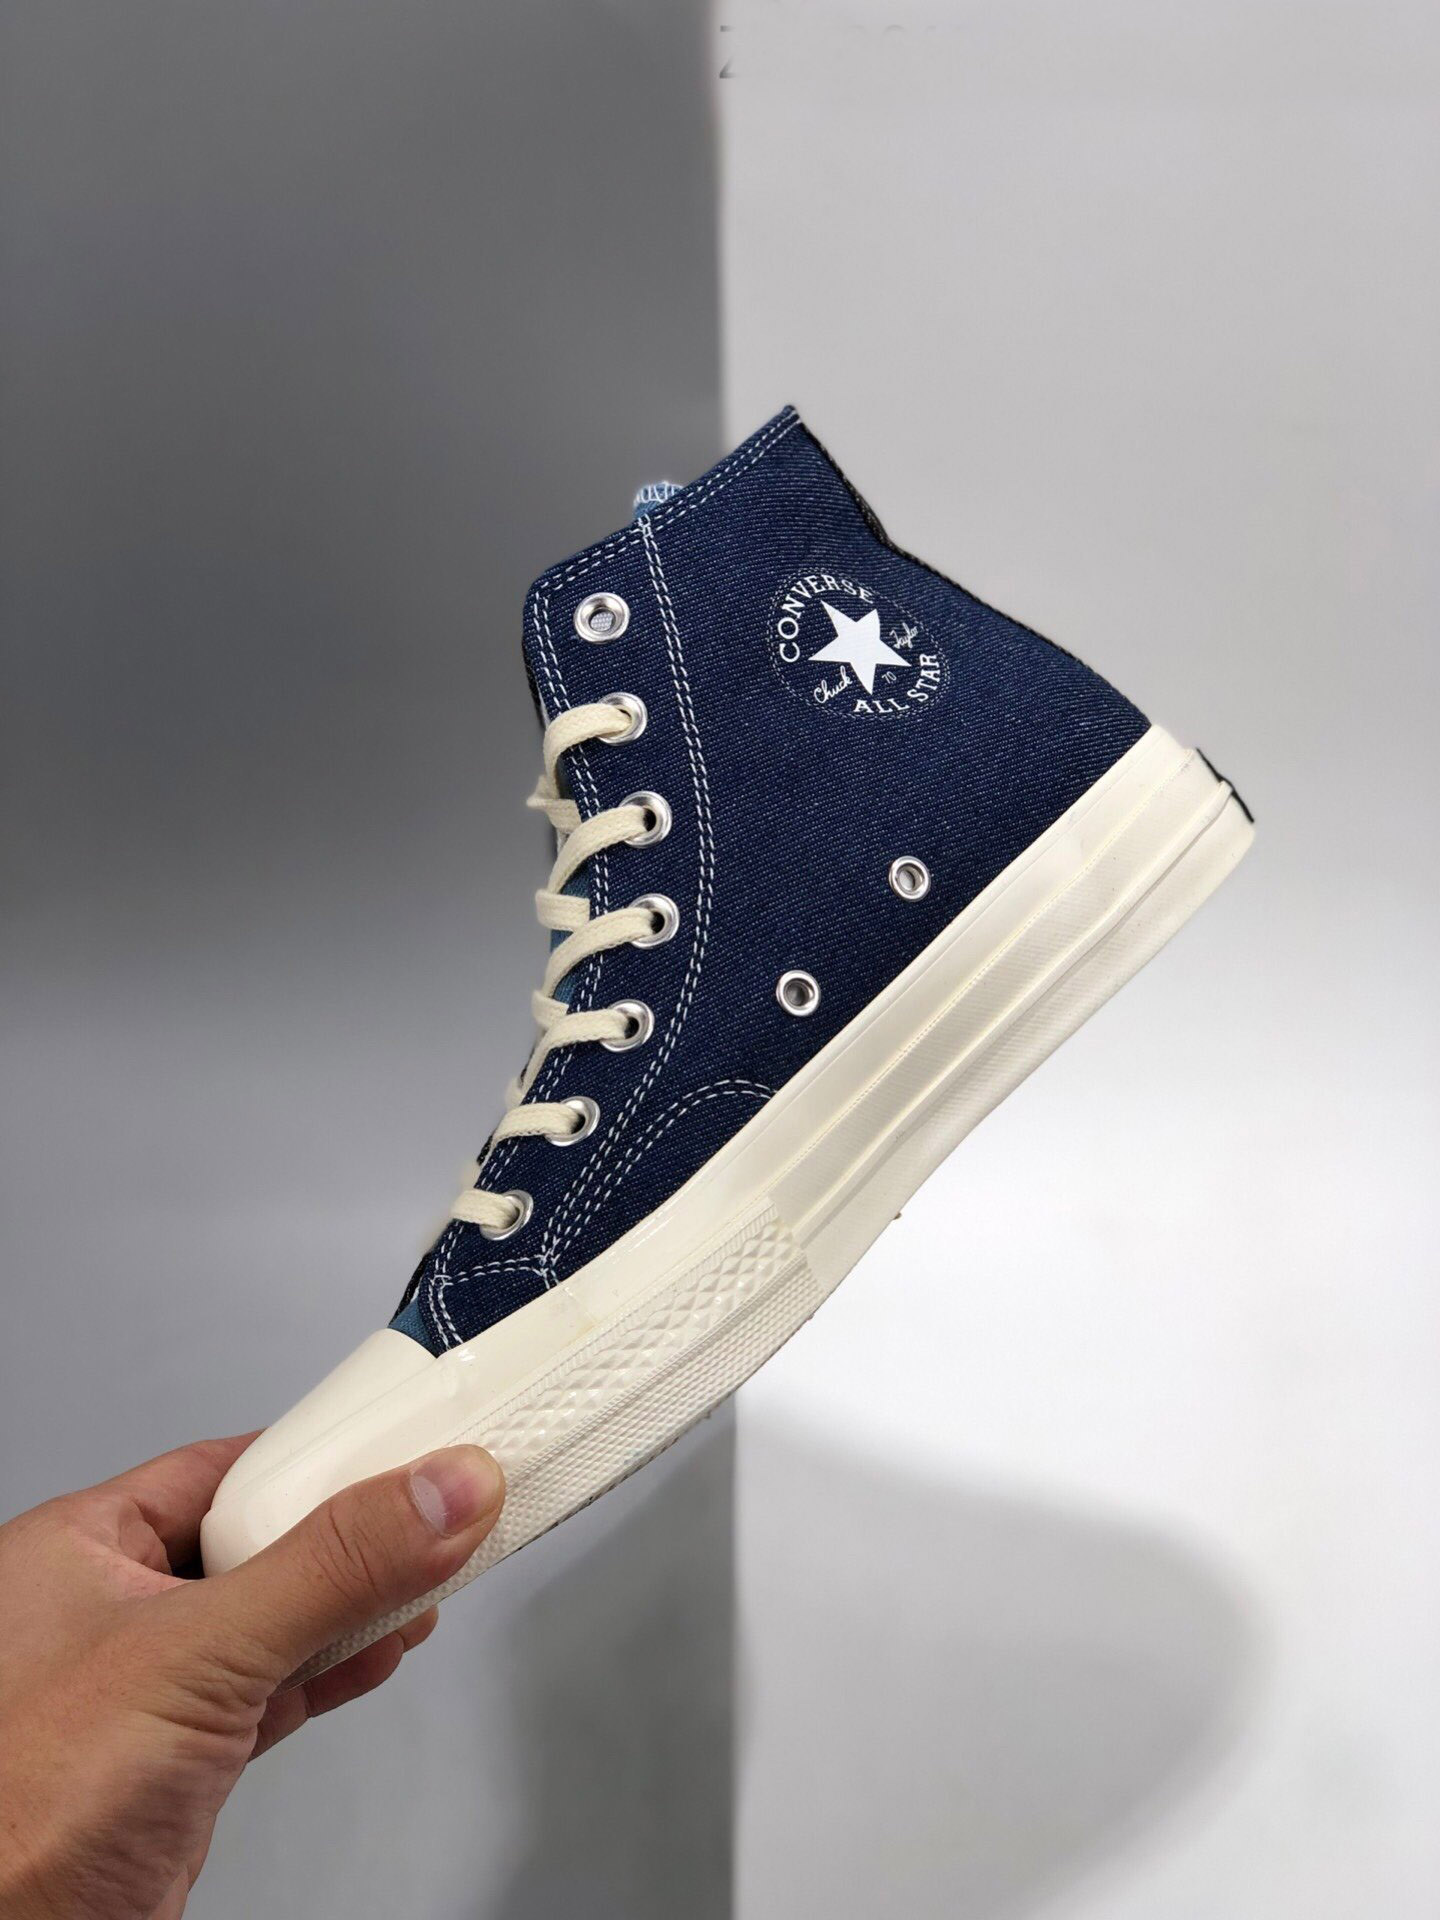 Converse Chuck 70 High “Renew Denim” For Sale – Sneaker Hello